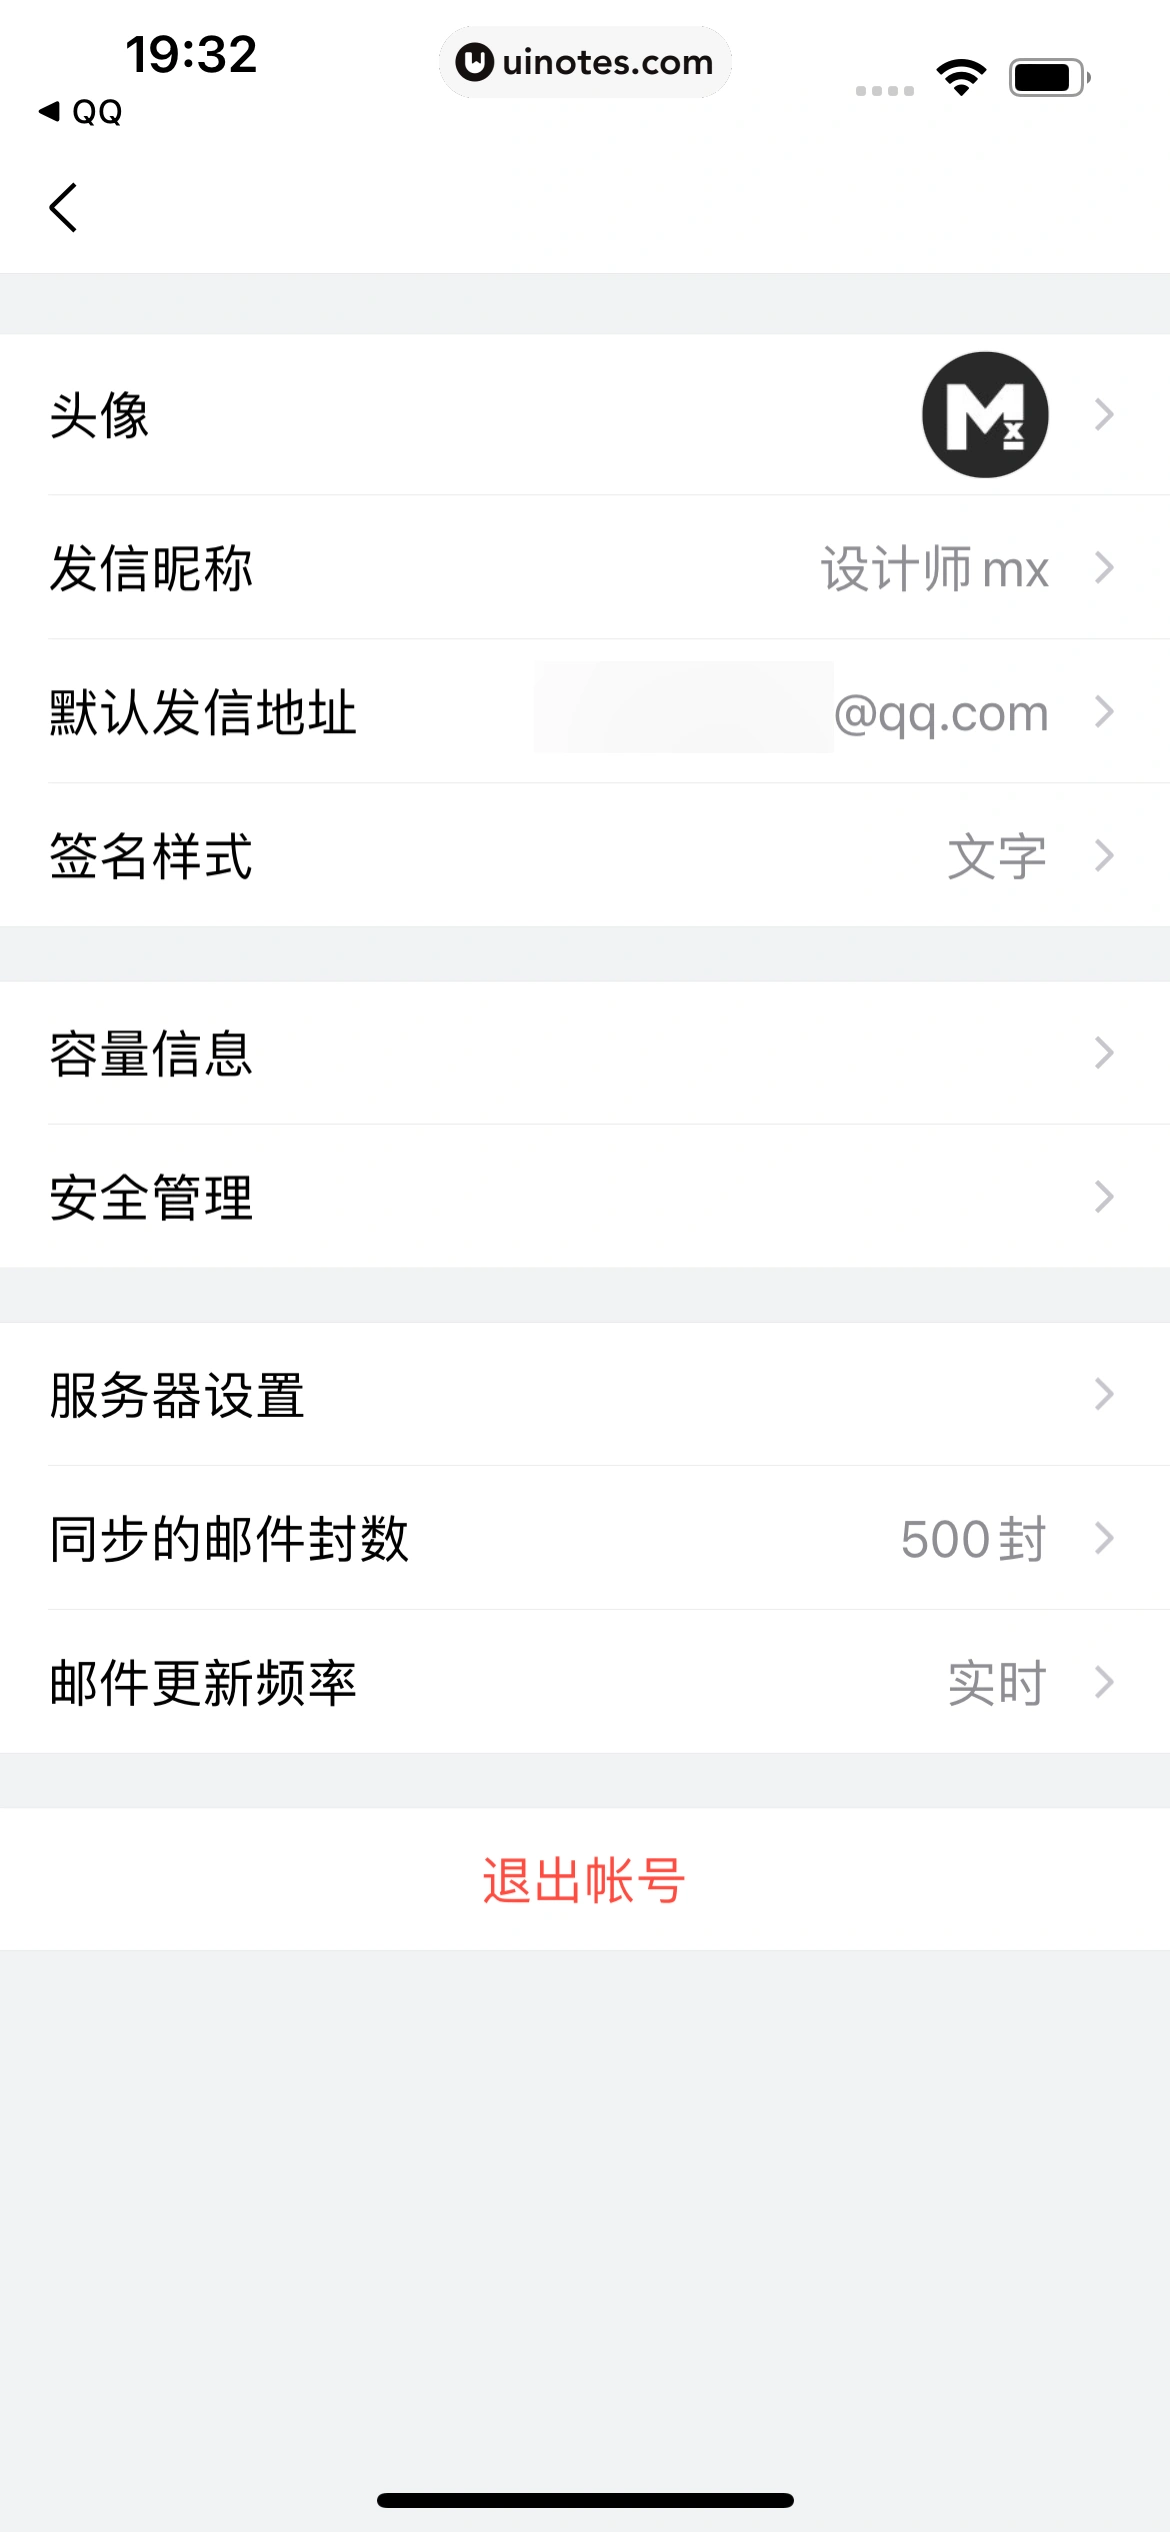 QQ邮箱 App 截图 039 - UI Notes